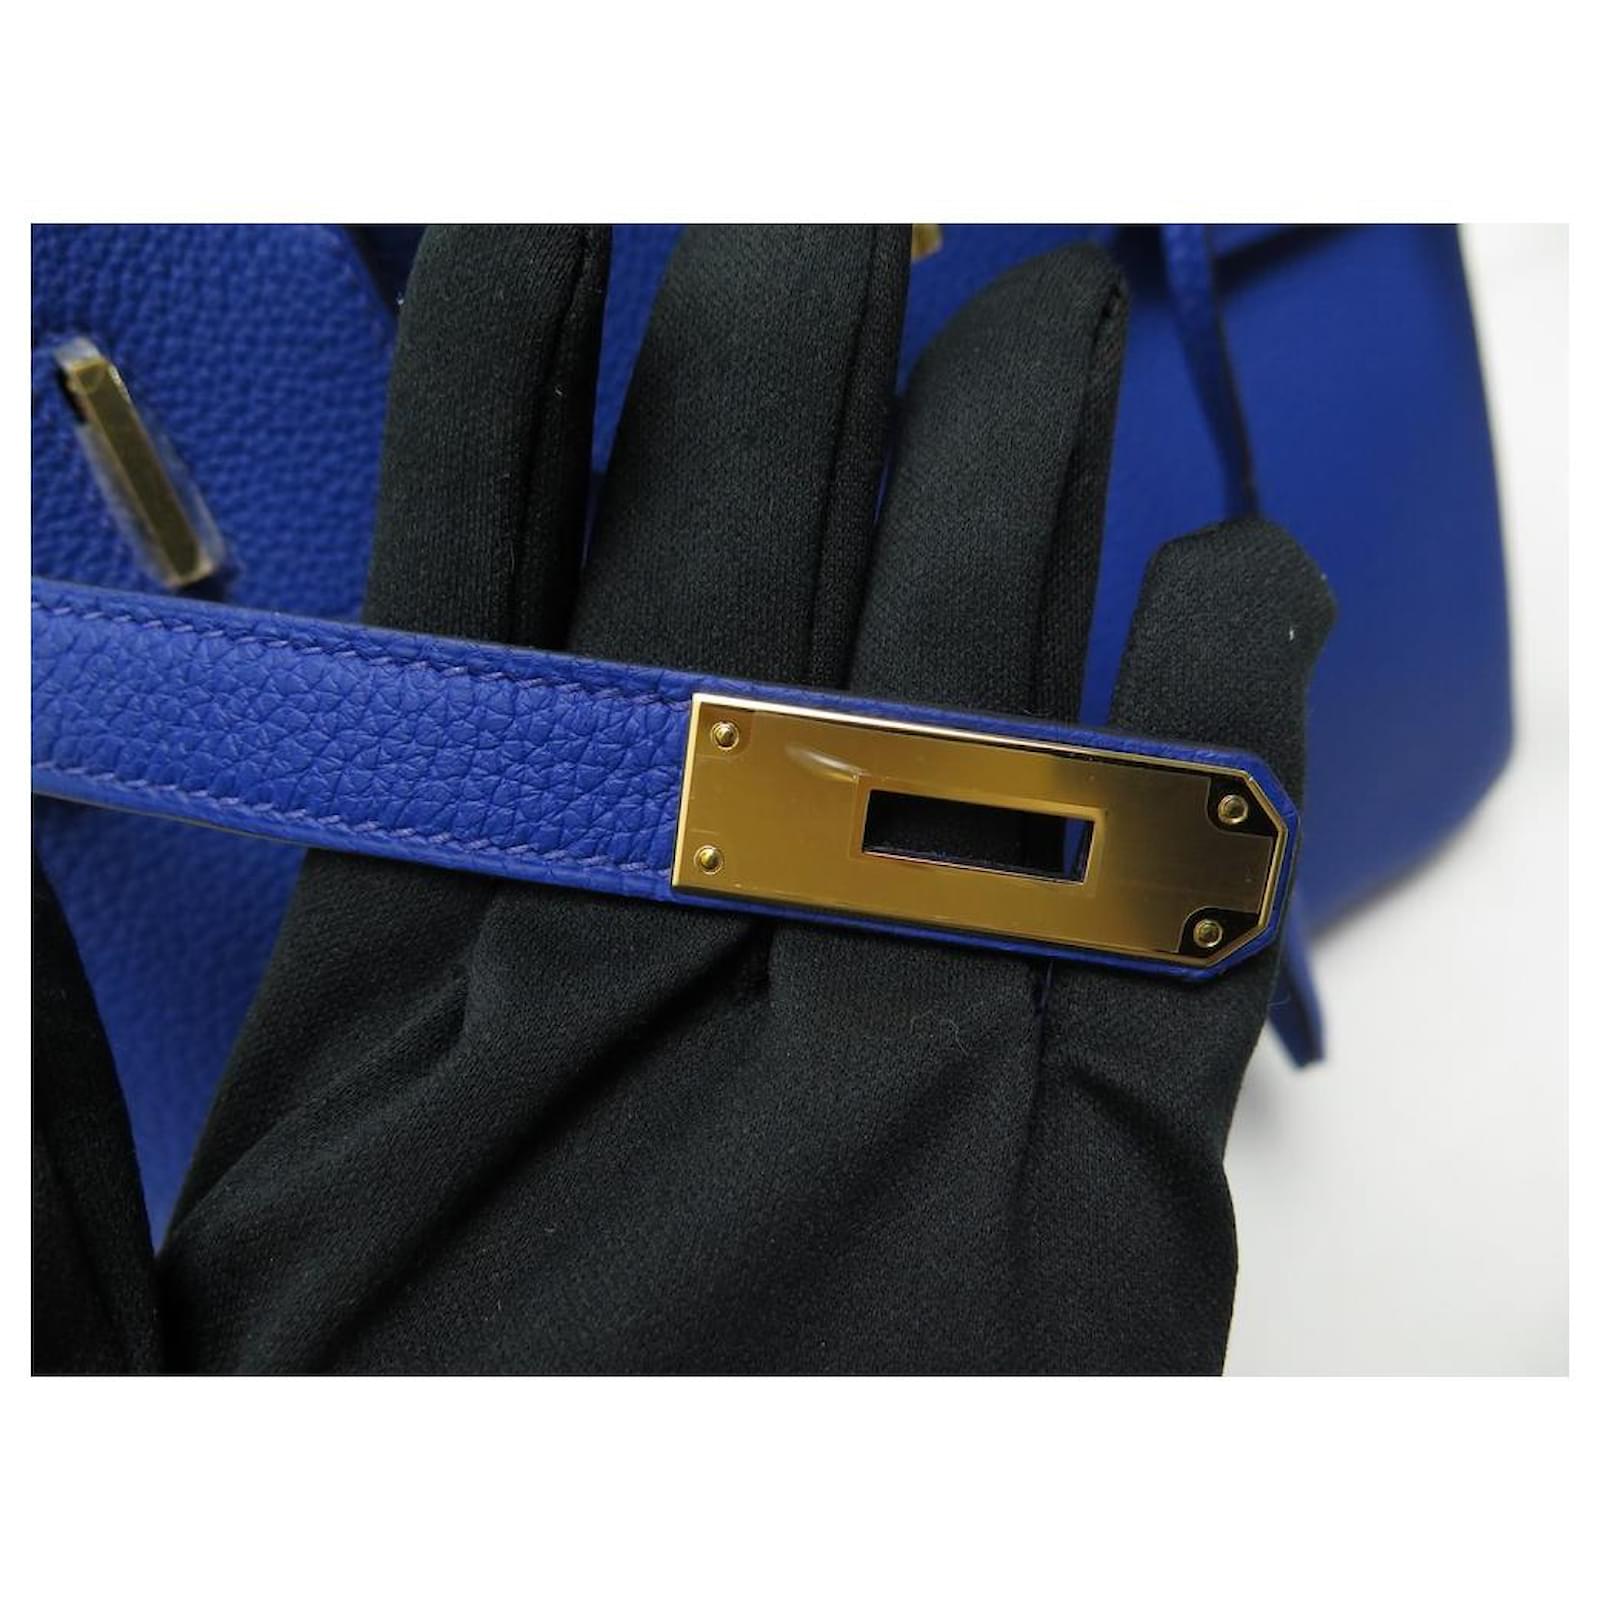 Handbags Hermès New Hermes Birkin Handbag 30 Royal Blue Togo Leather New Leather Purse Hand Bag